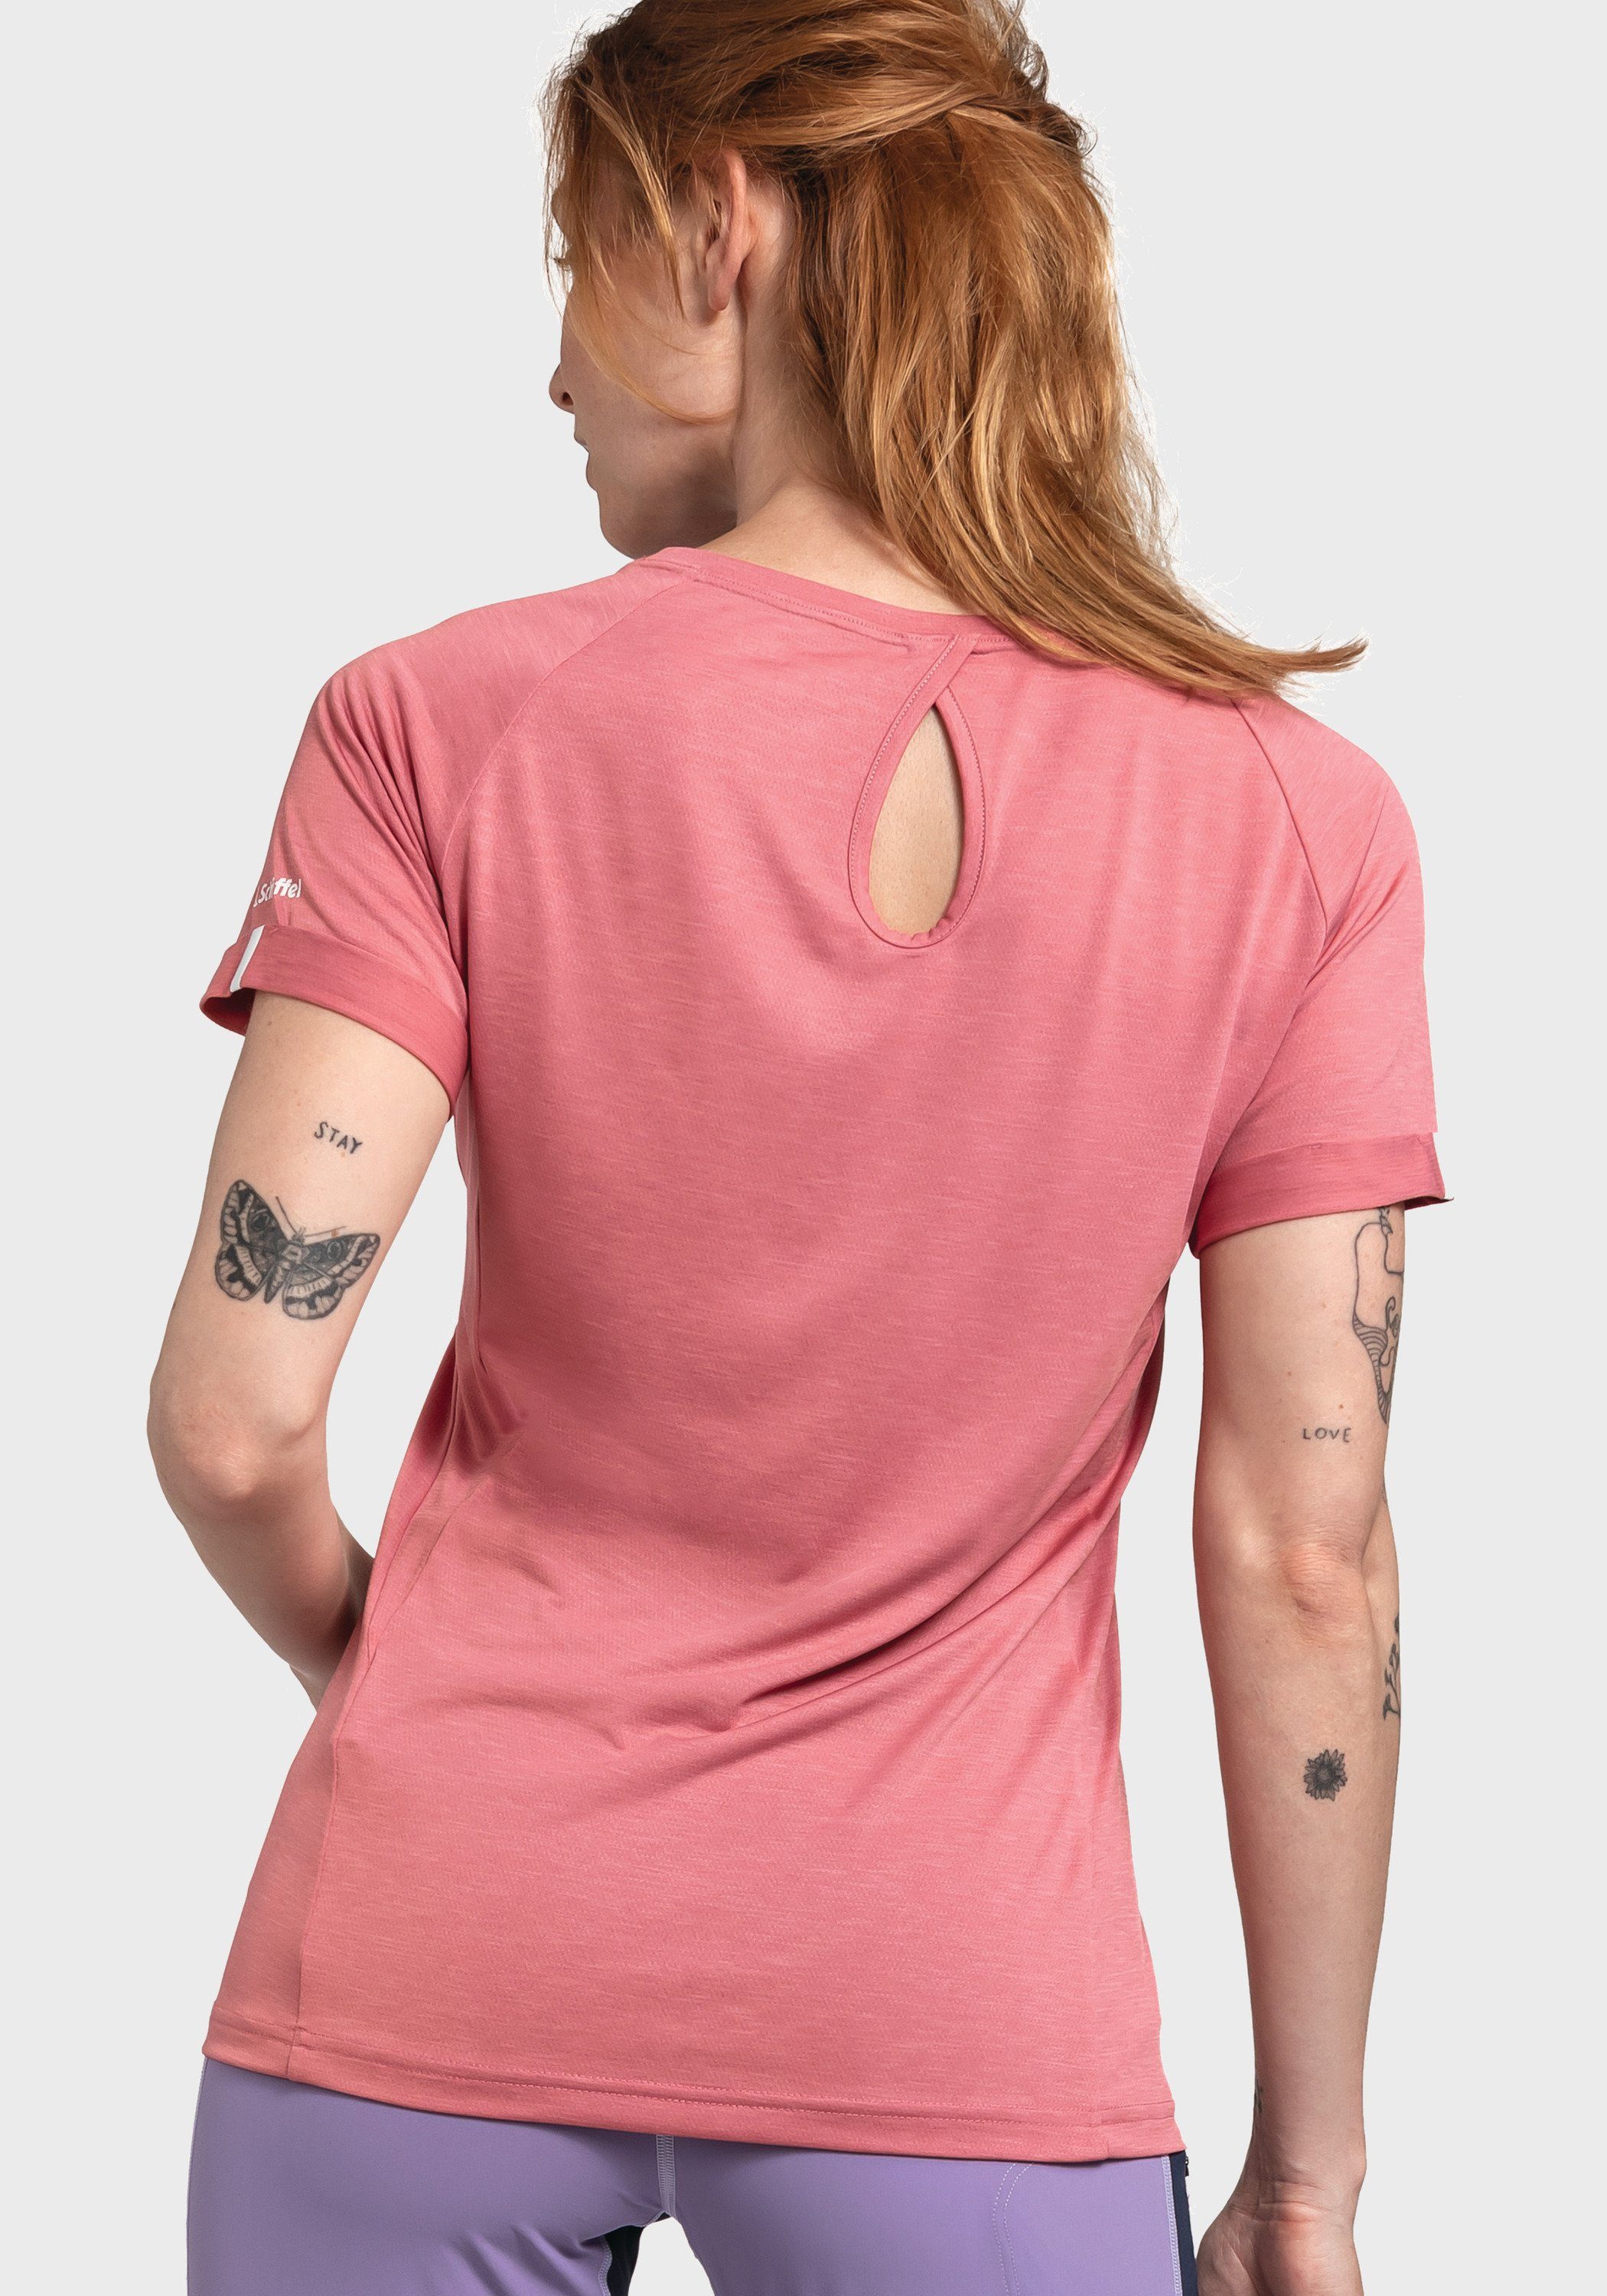 Schöffel L Shirt Boise2 rosa Funktionsshirt T